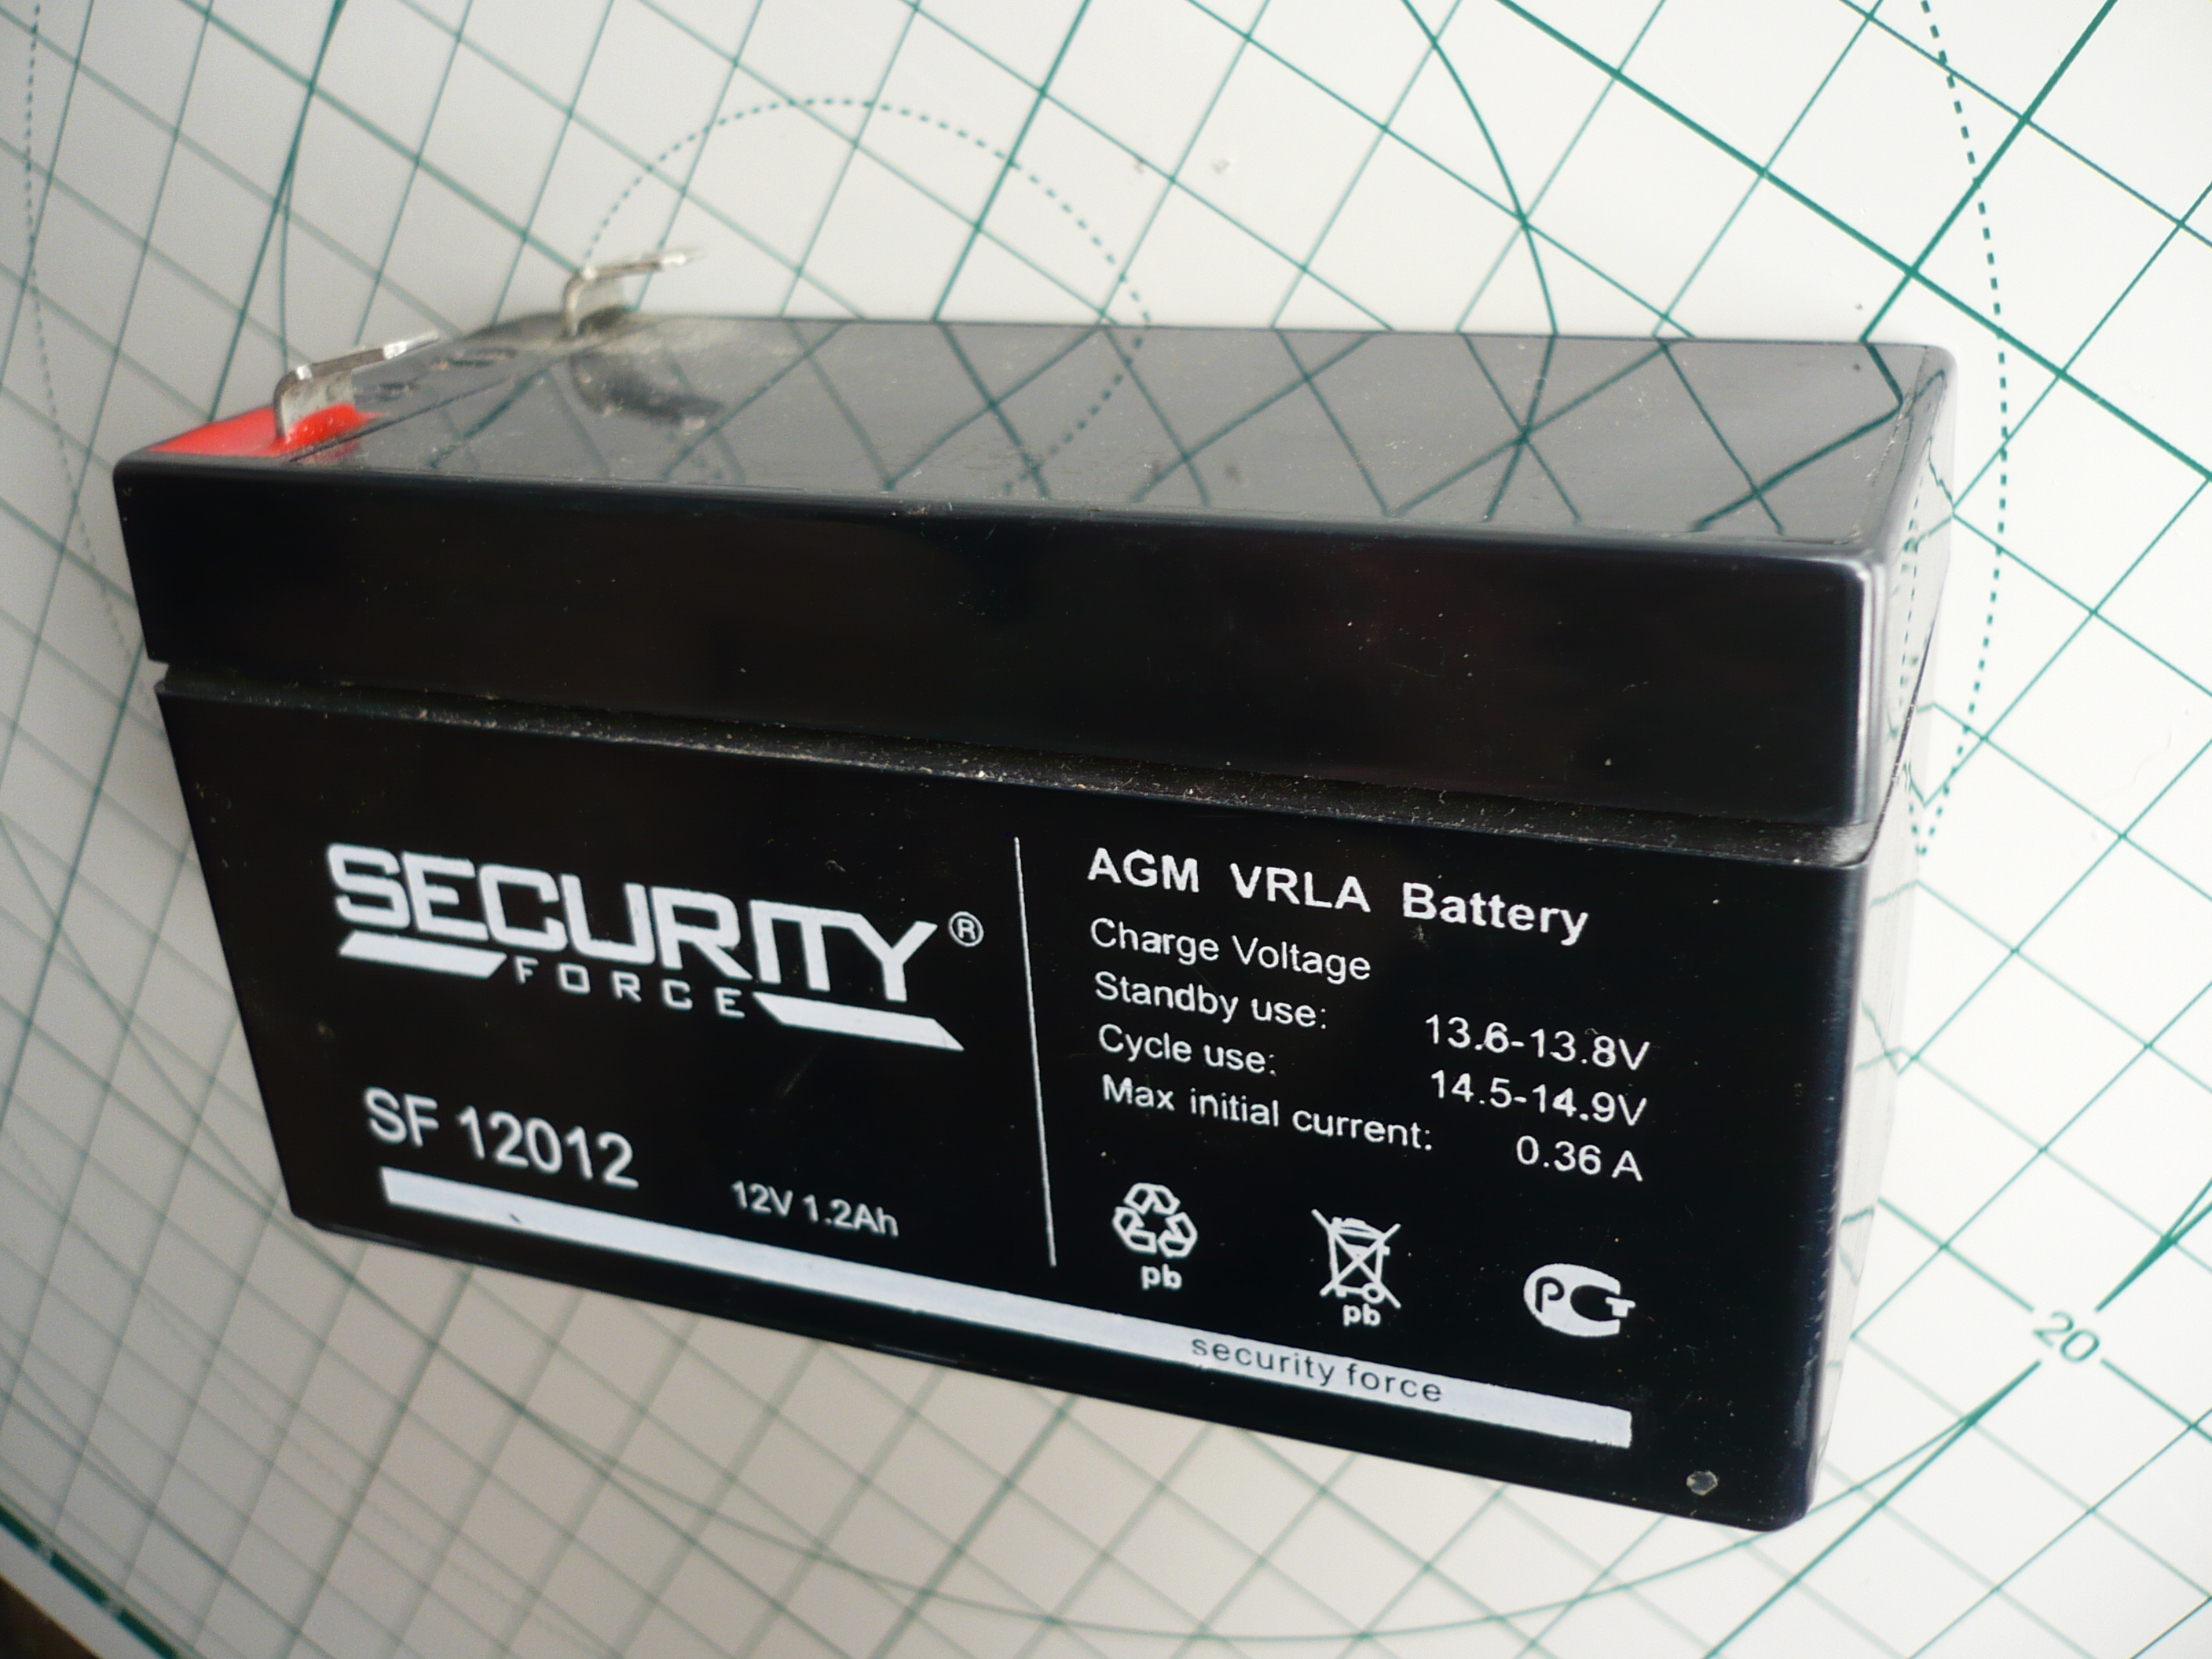 Security Force аккумулятор 12v/7ah AGM VRLA. Заряжаем аккумулятор AGM 12v. Батарея w b r AGM VRLA Battery. Райдер АГМ аккумулятор.